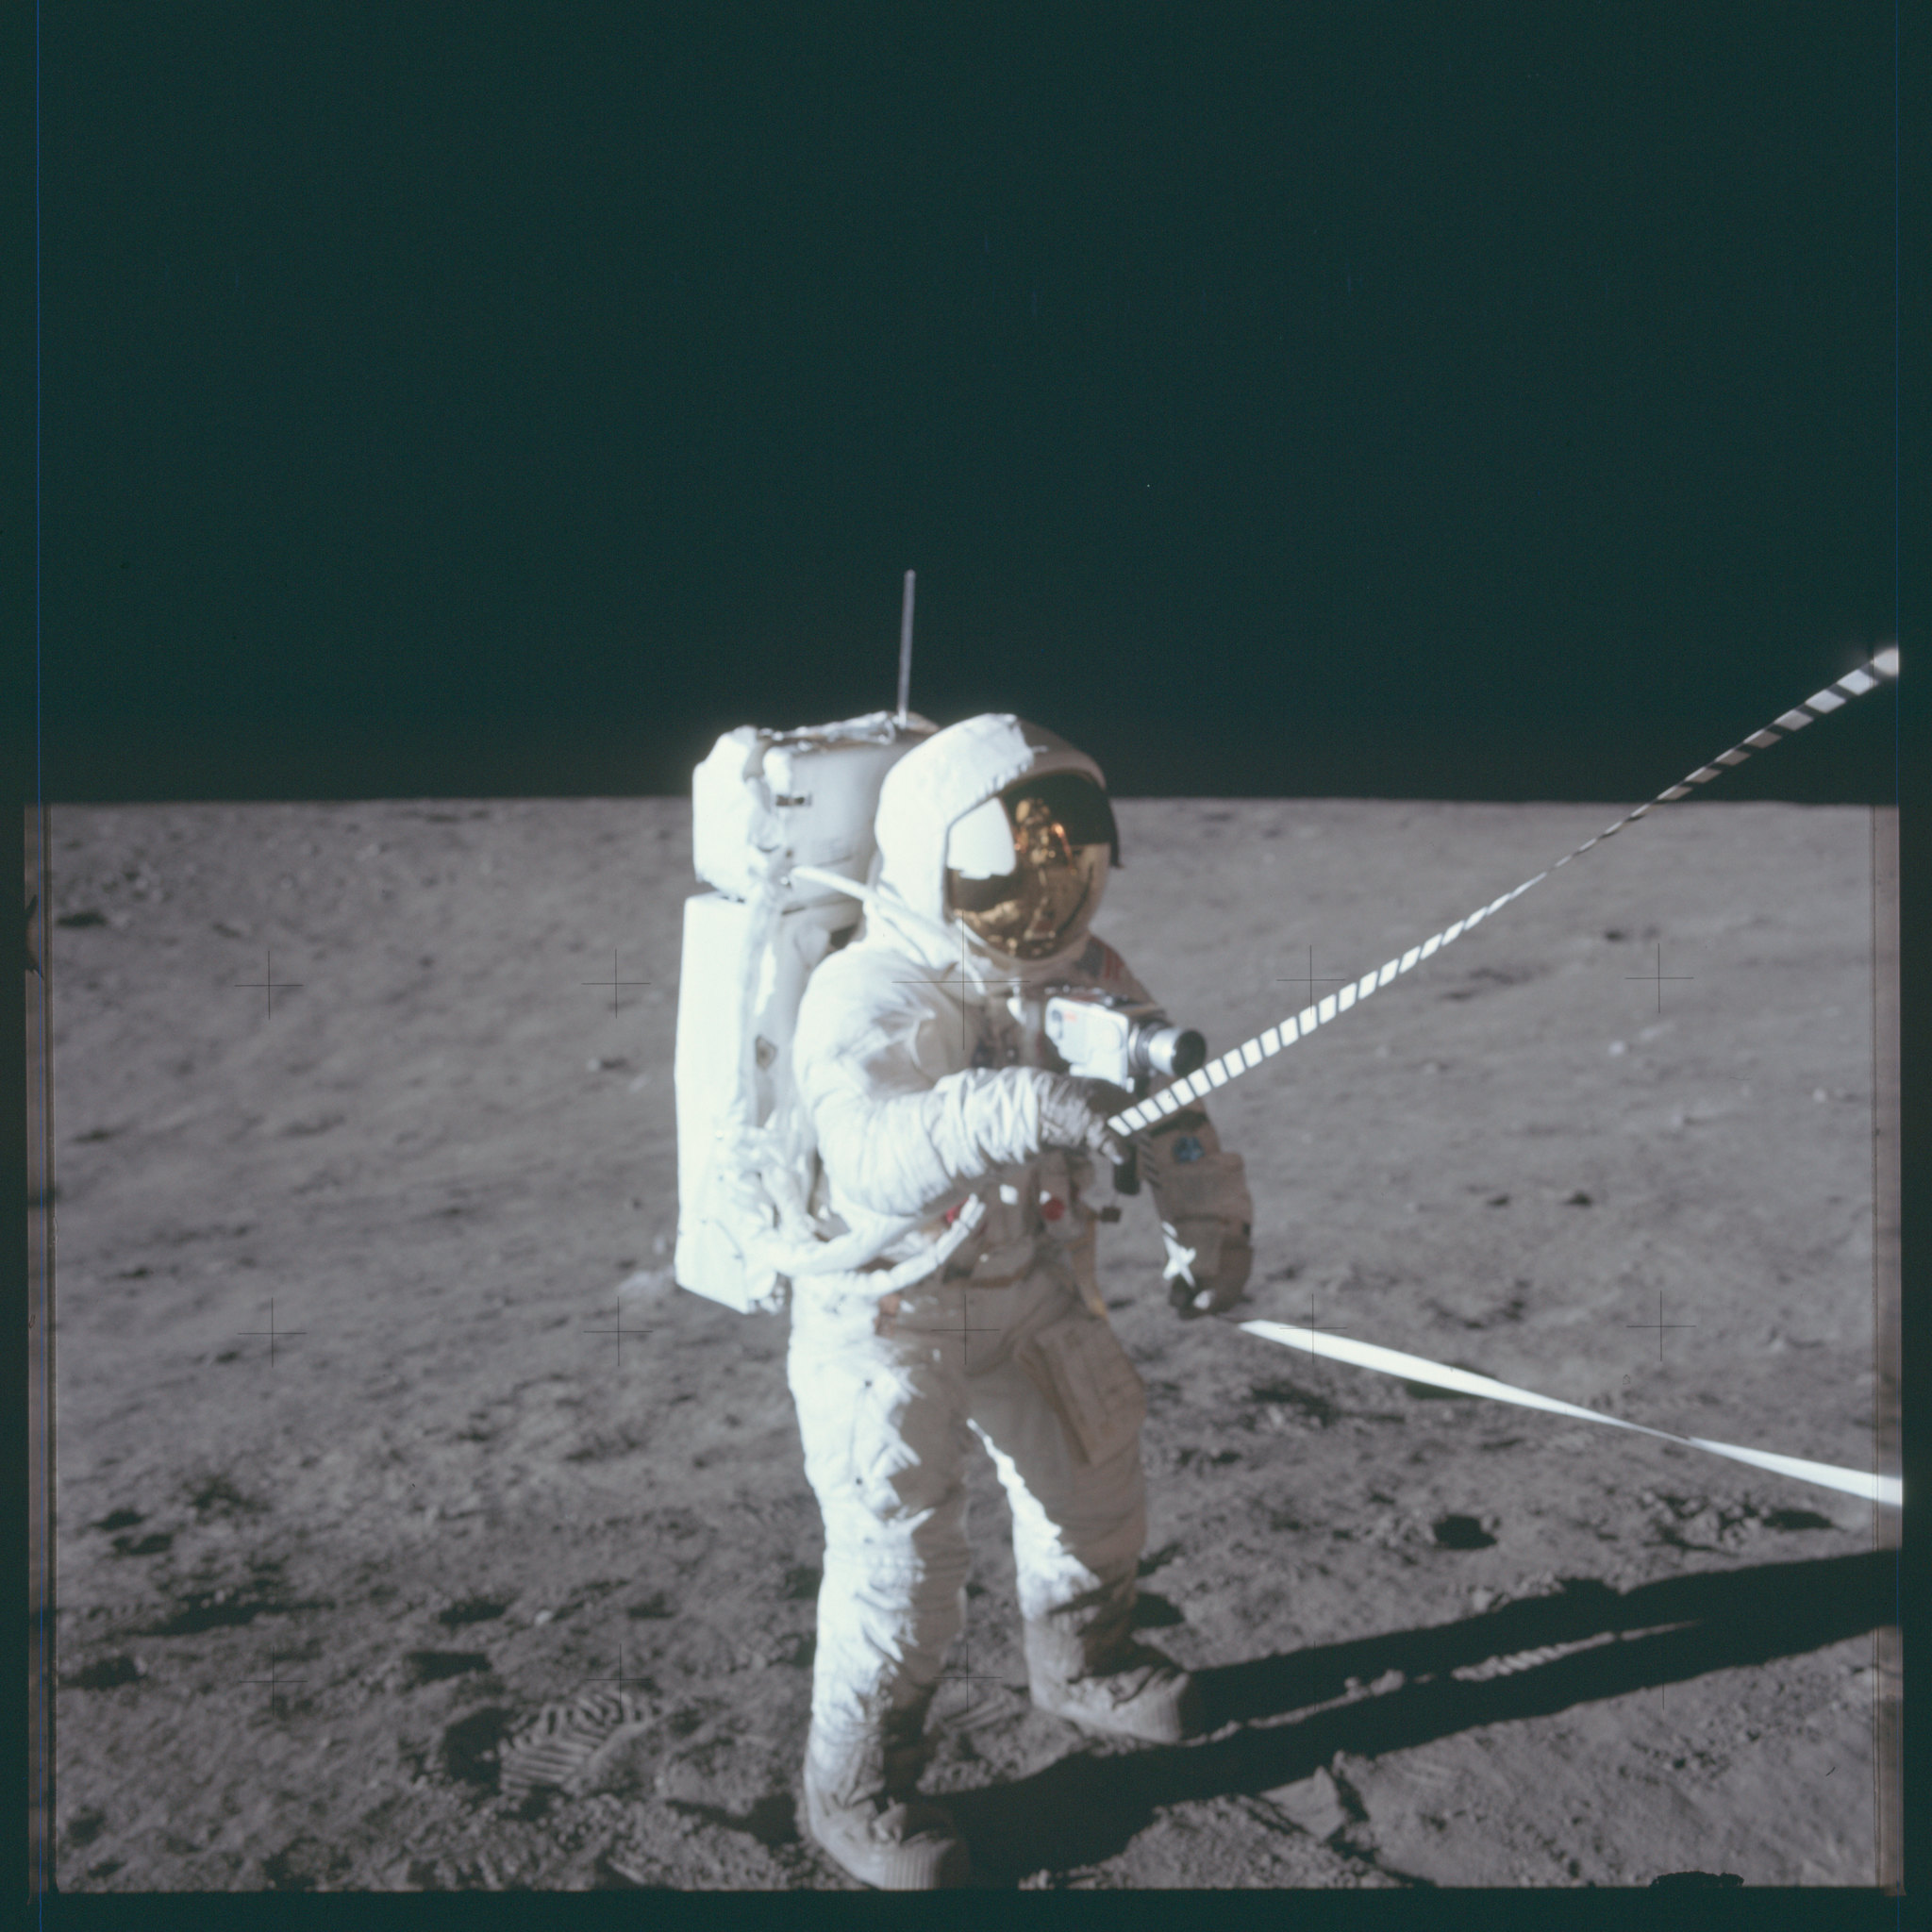 Das Project Apollo Archive | Hochauflösenden Fotos der Apollo Missionen der NASA